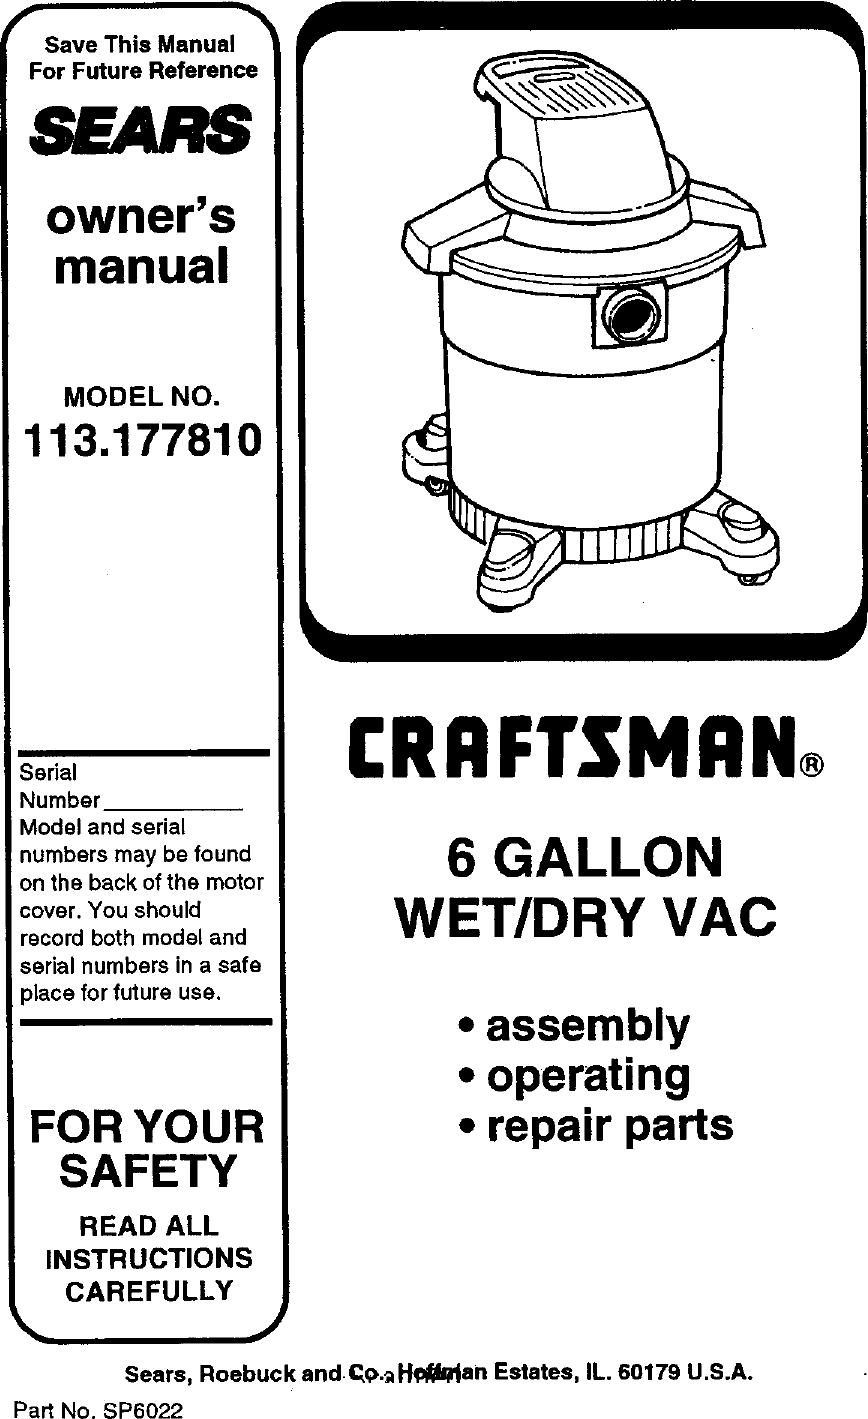 Craftsman 113177810 User Manual 6 GALLON WET/DRY VACUUM Manuals ...